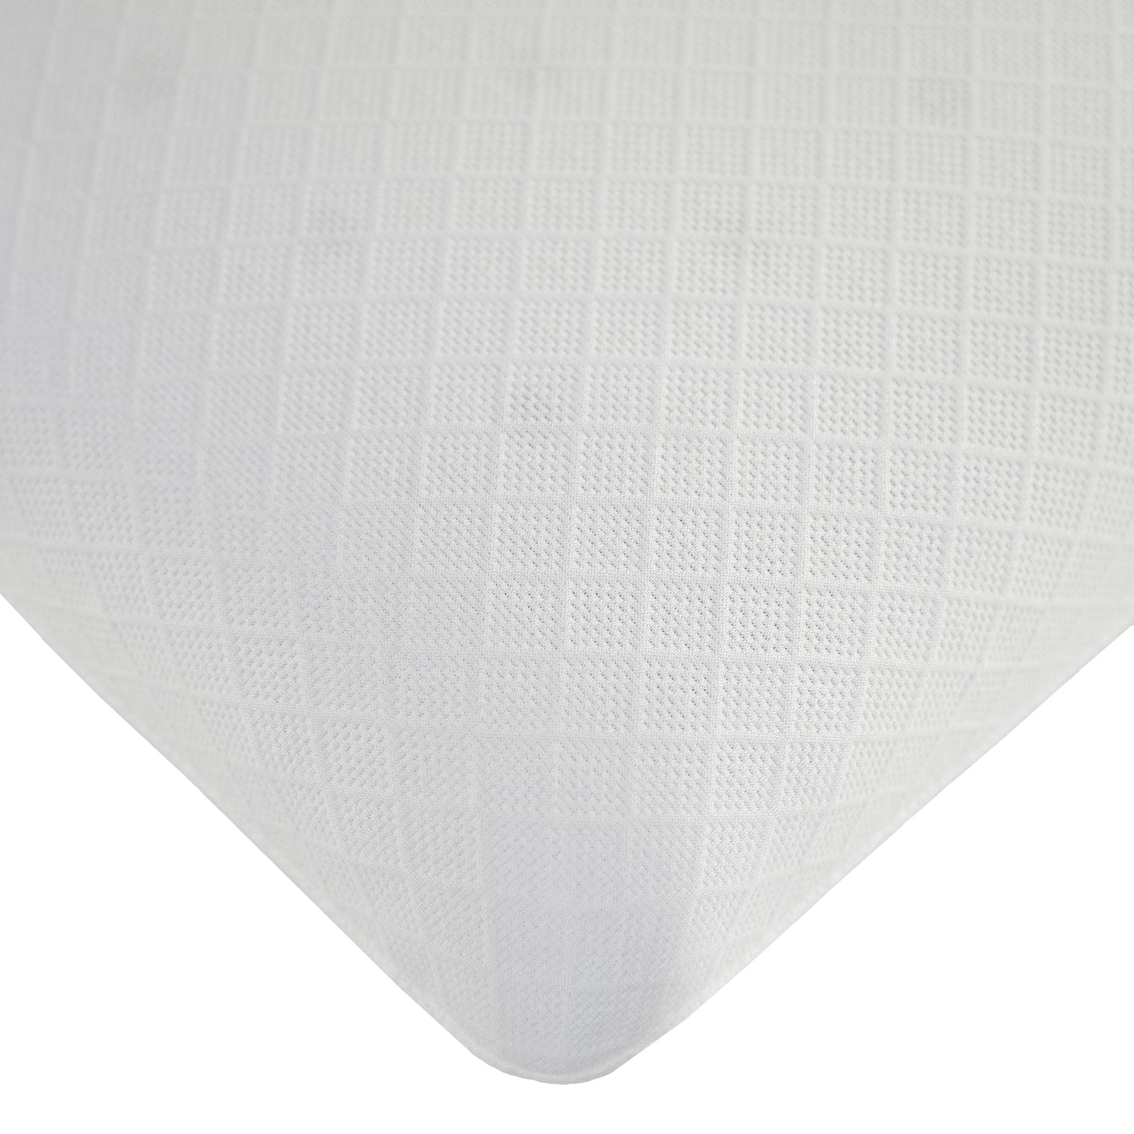 Restonic Classic Comfort Memory Foam Pillow - Image 5 of 5